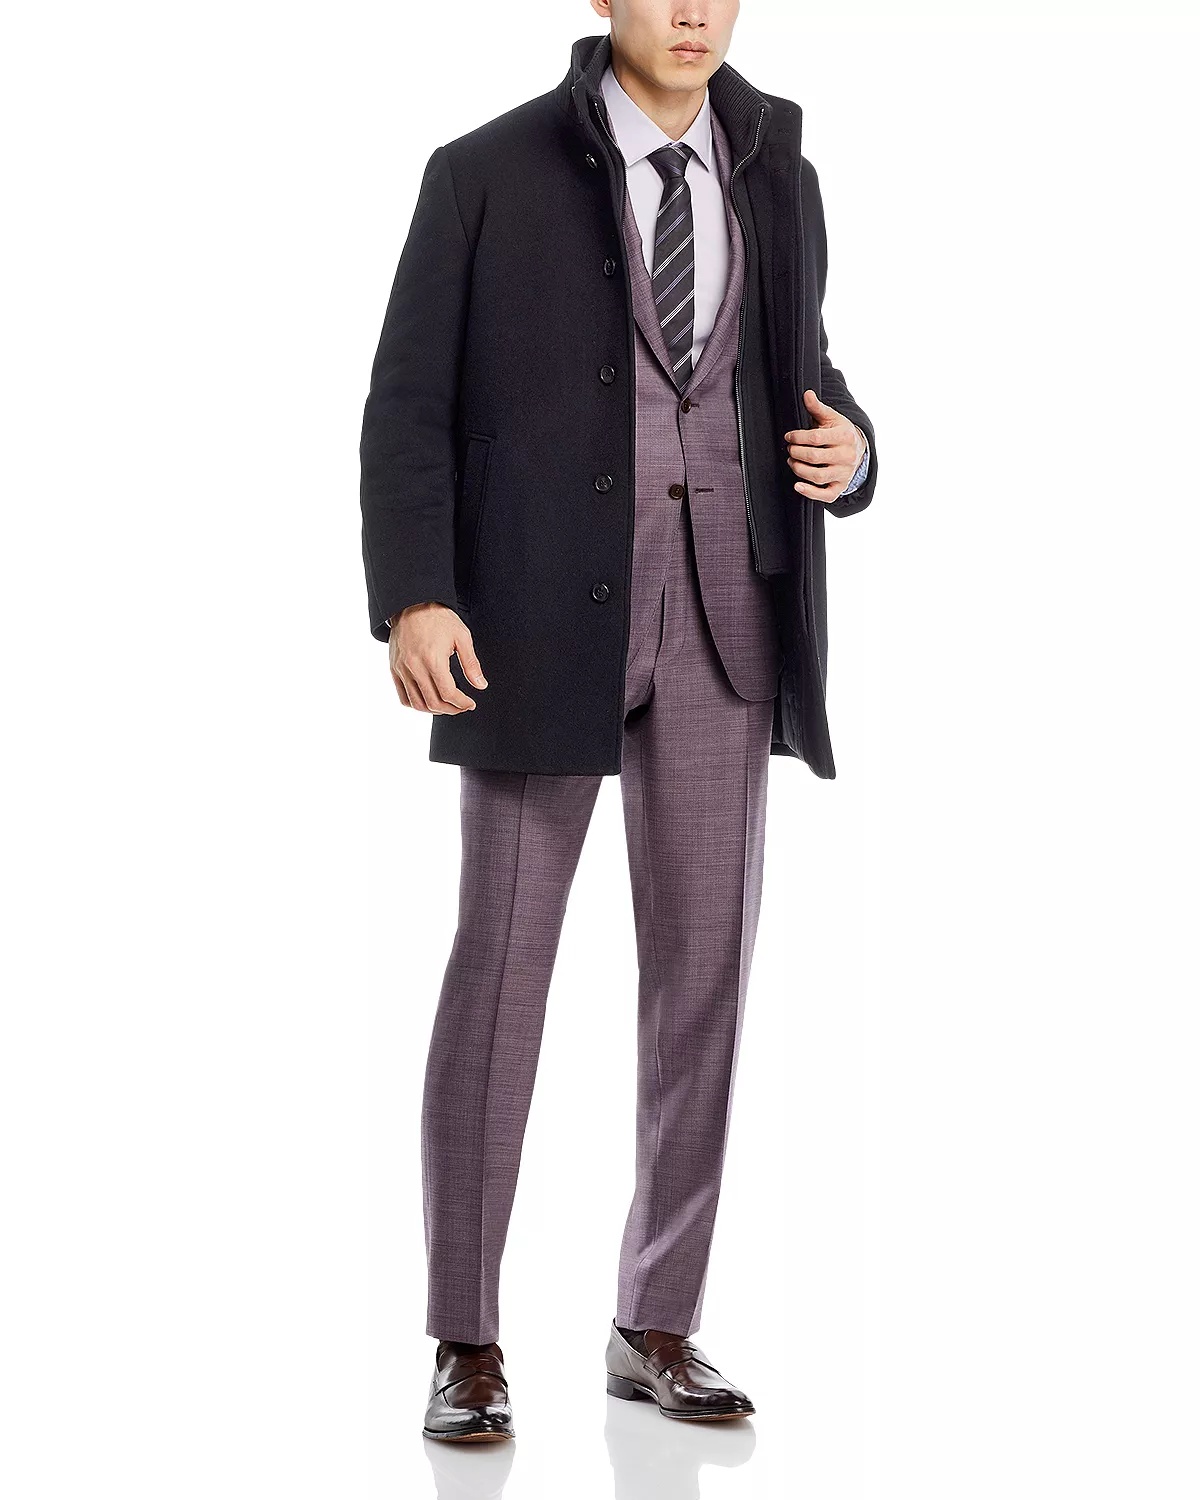 Siena Sharkskin Classic Fit Suit - 2